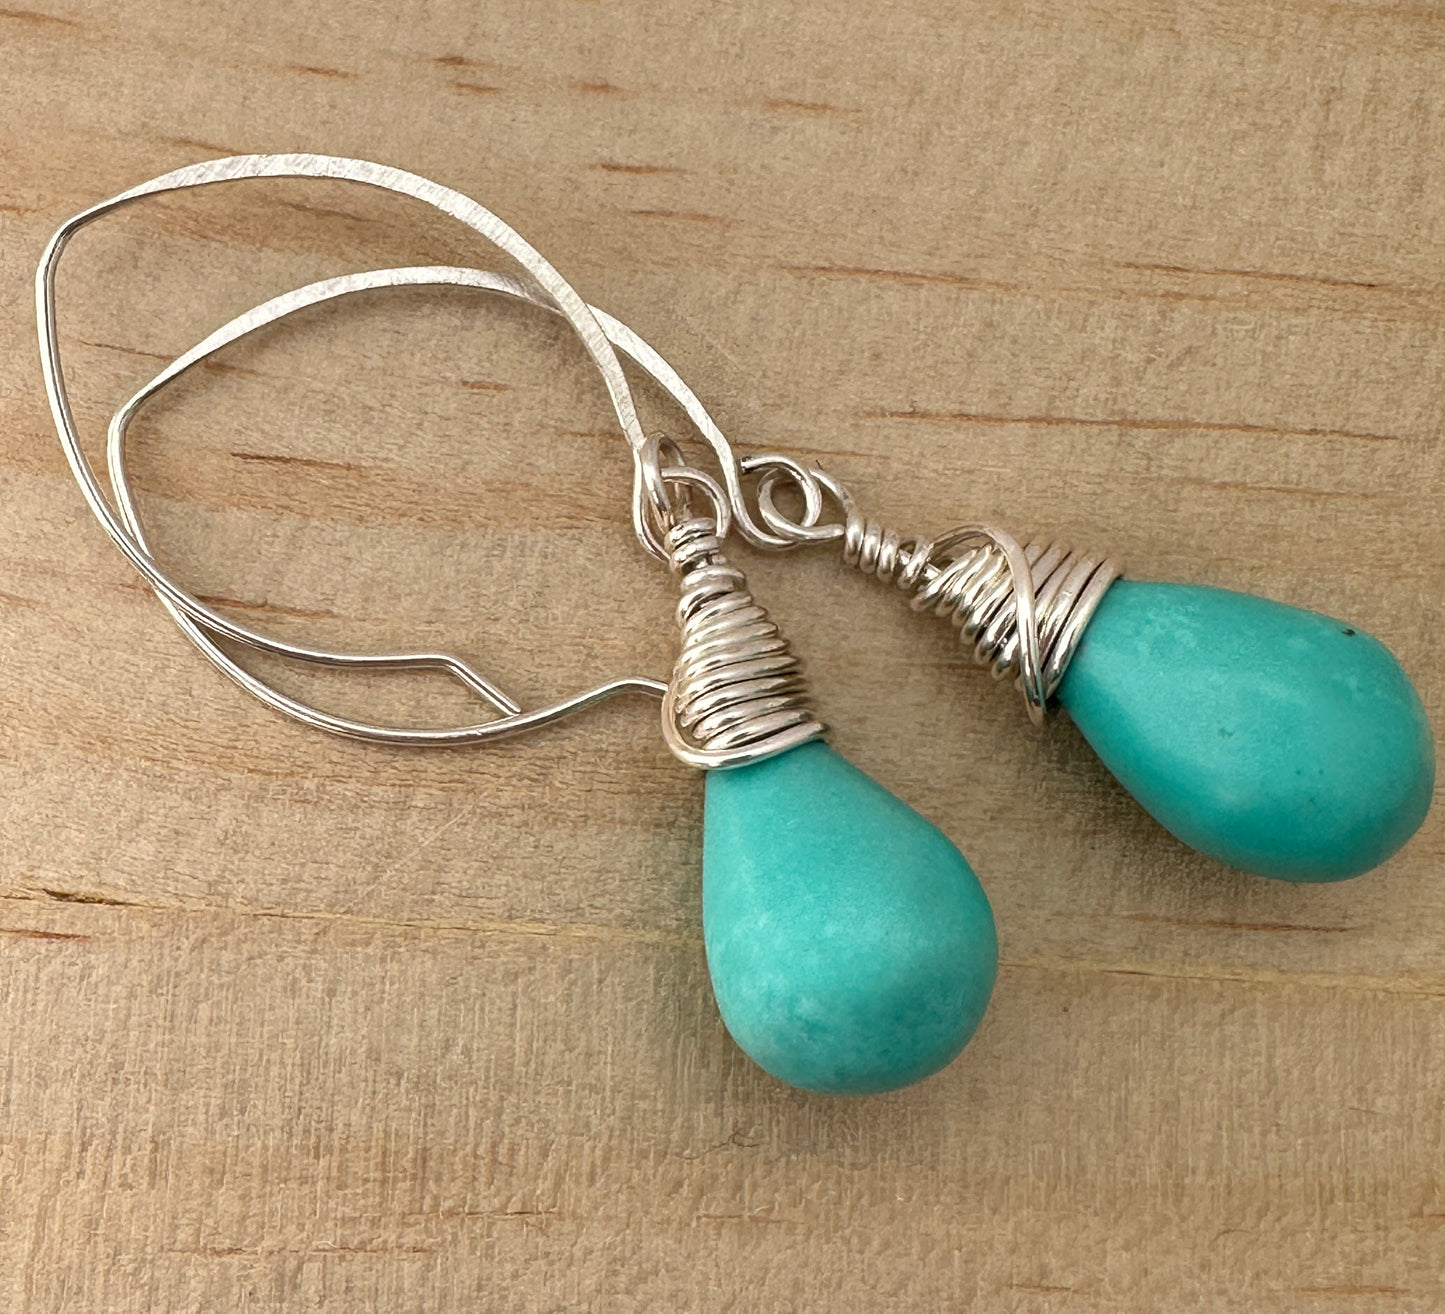 Teardrop Turquoise Wire Wrapped Earrings on Almond Shaped Silver Ear Wires